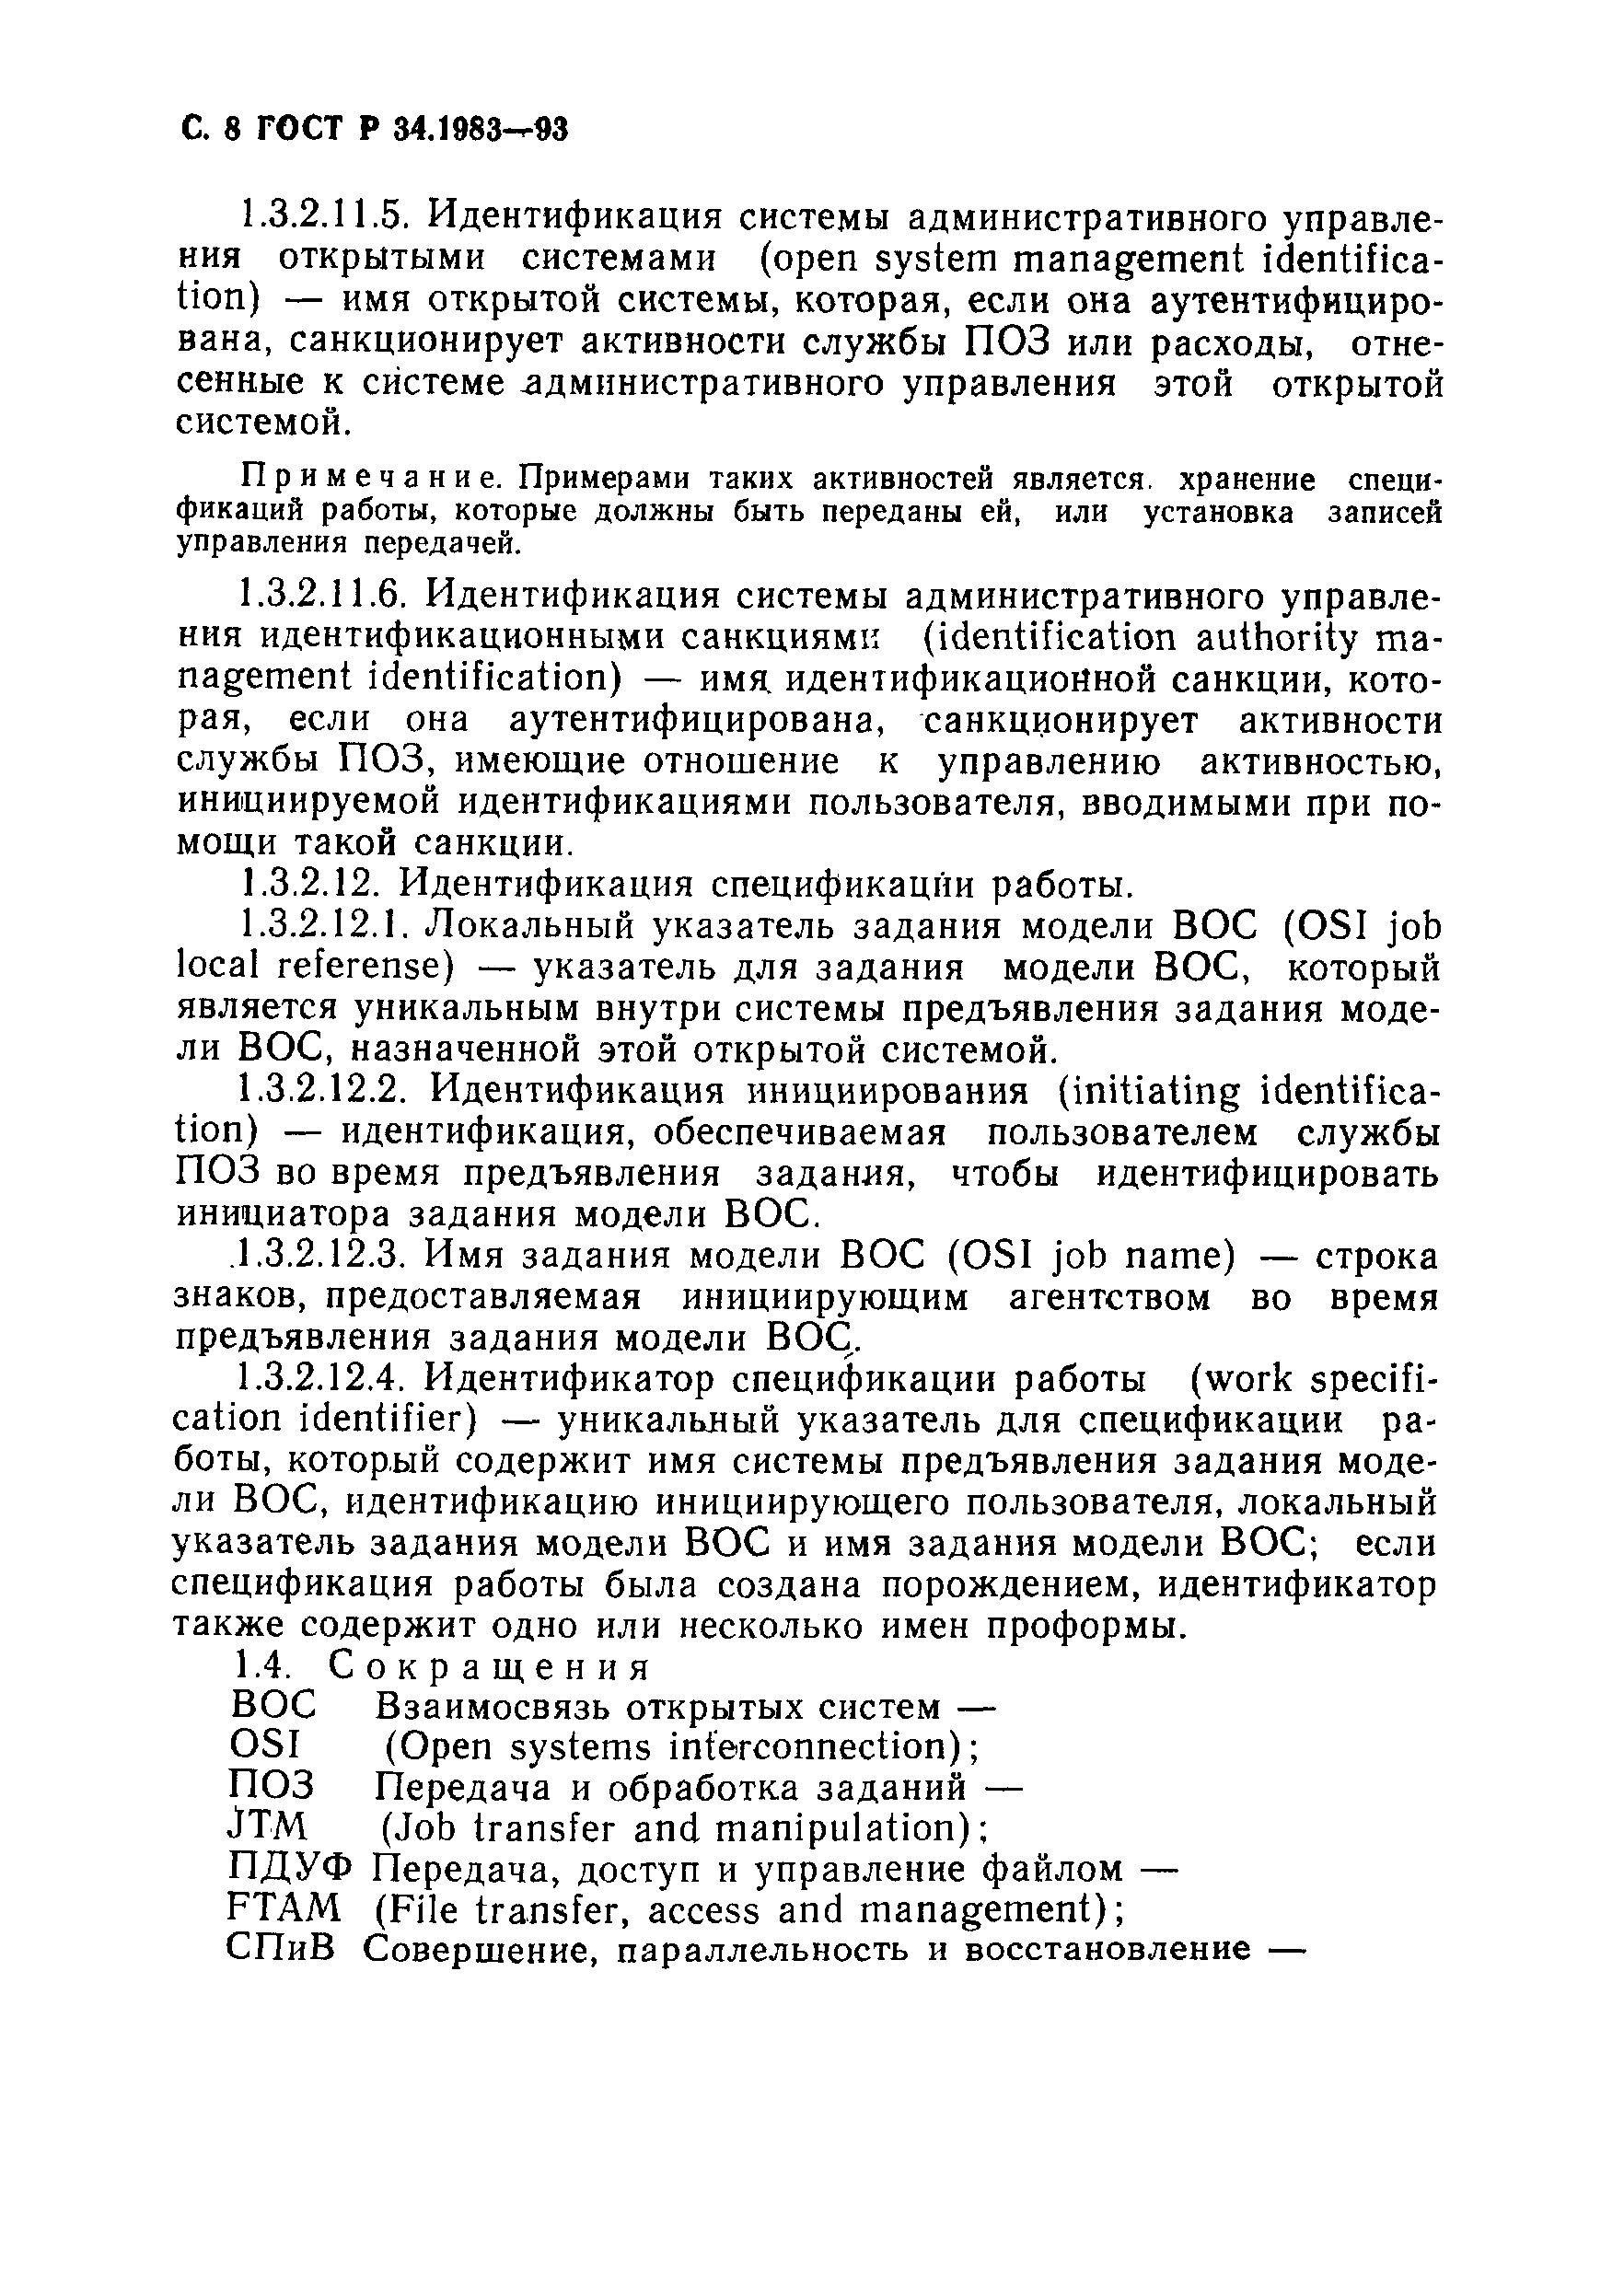 ГОСТ Р 34.1983-93. Страница 9